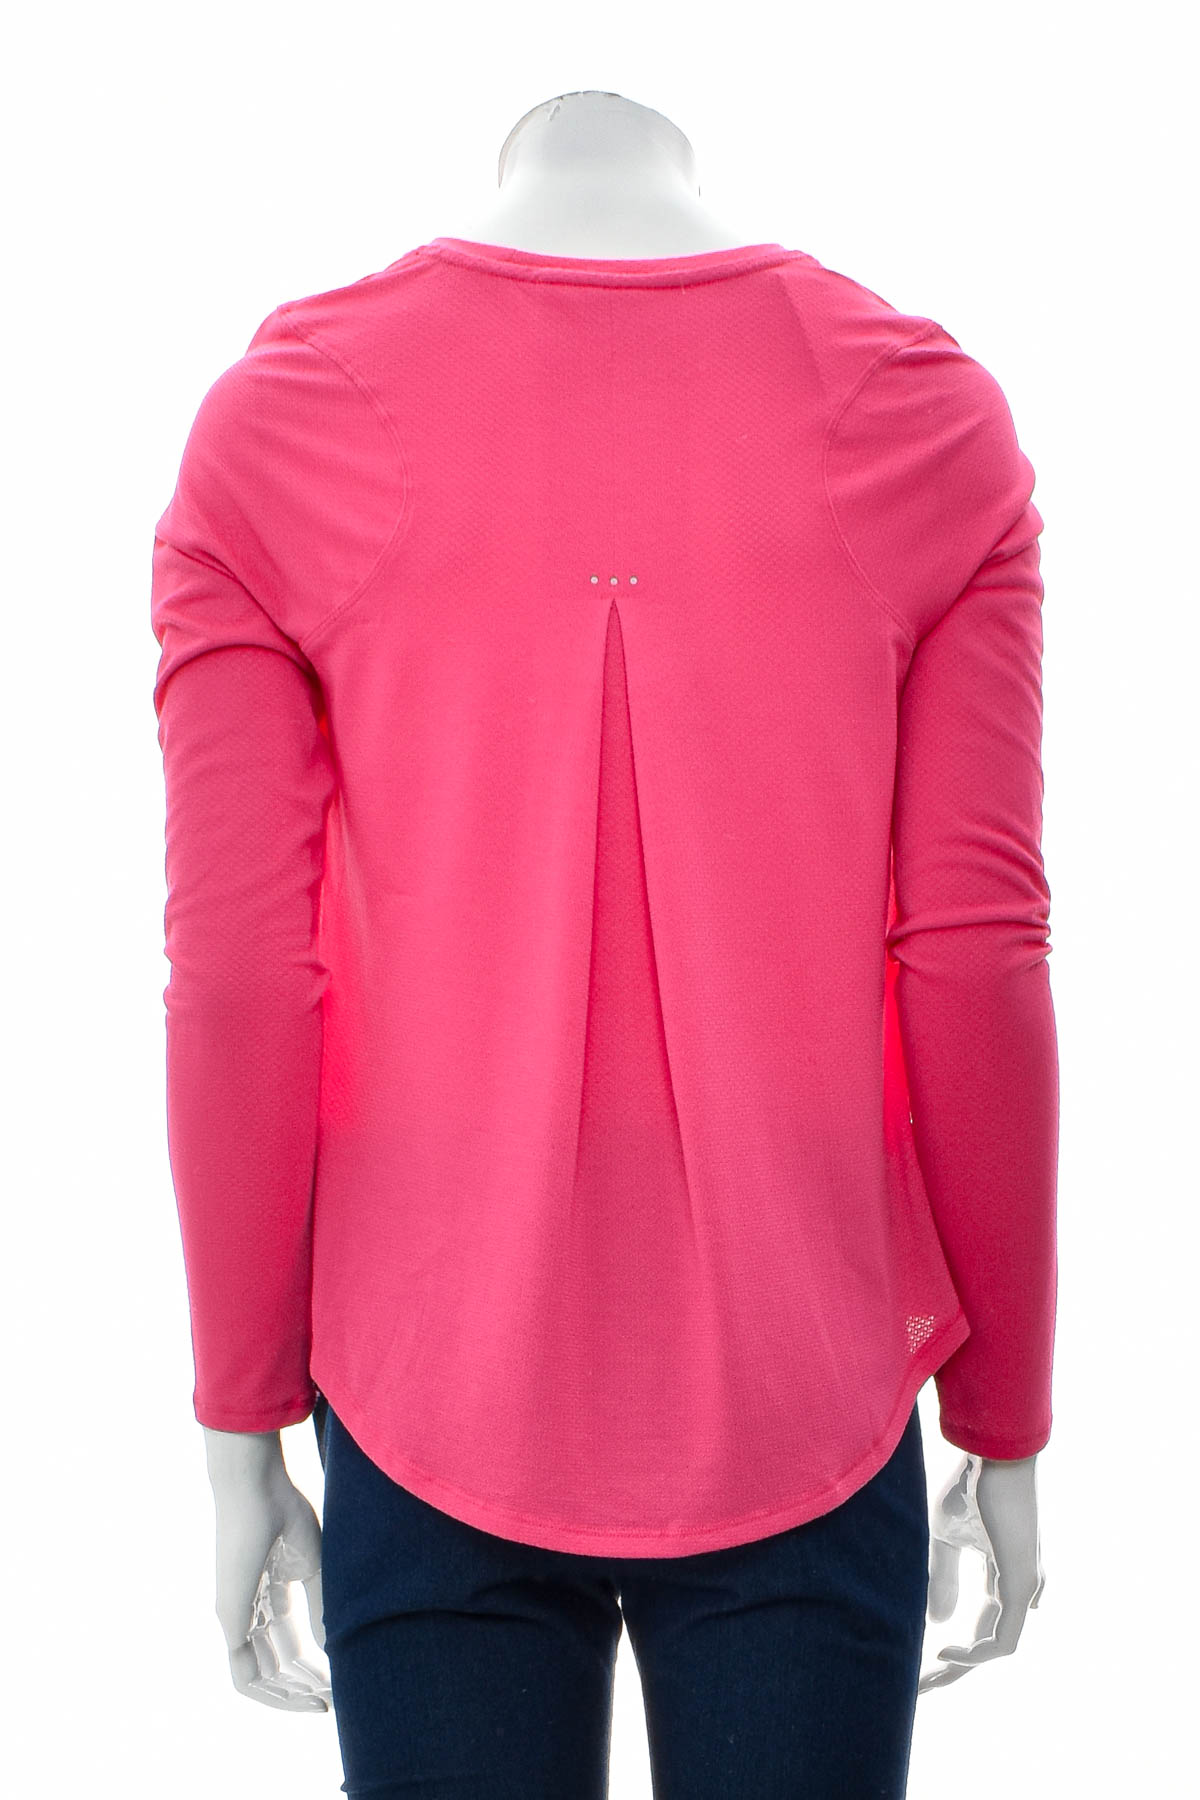 Women's blouse - AVIA - 1